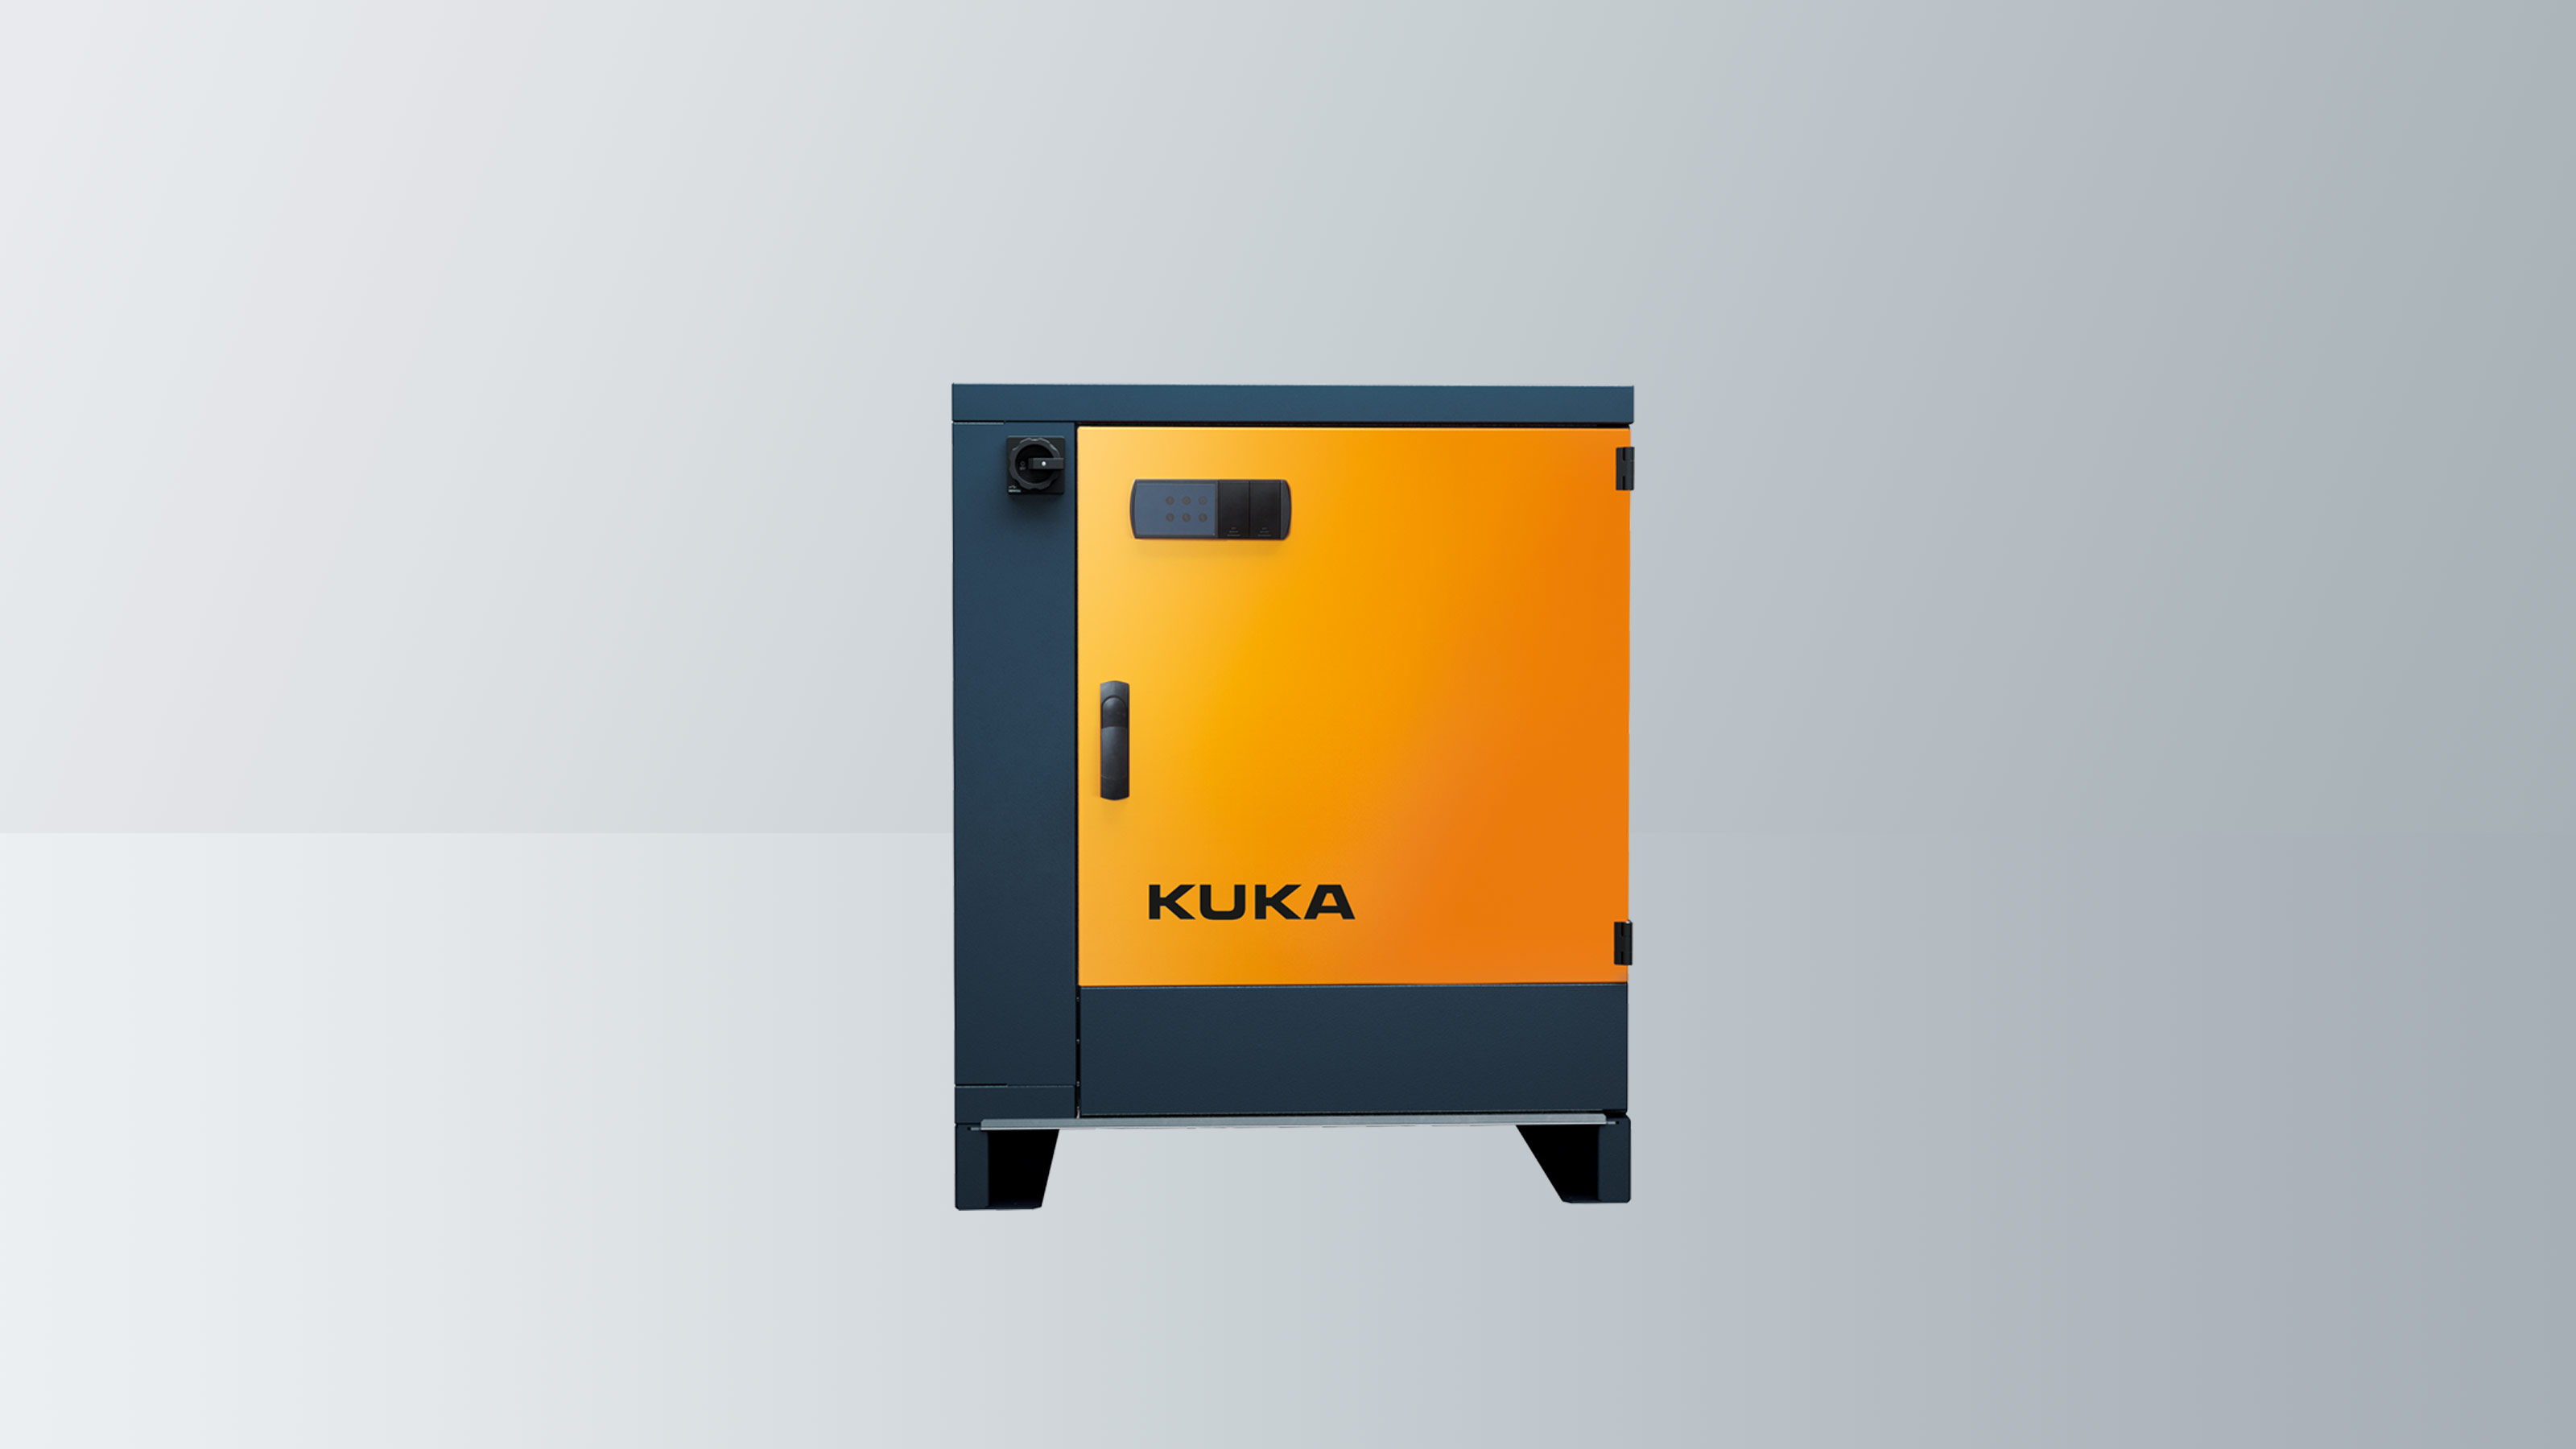 No D3236-K13 GS1 45130605 Article Kuka KPC4-6 Axis Robot PC Controller 